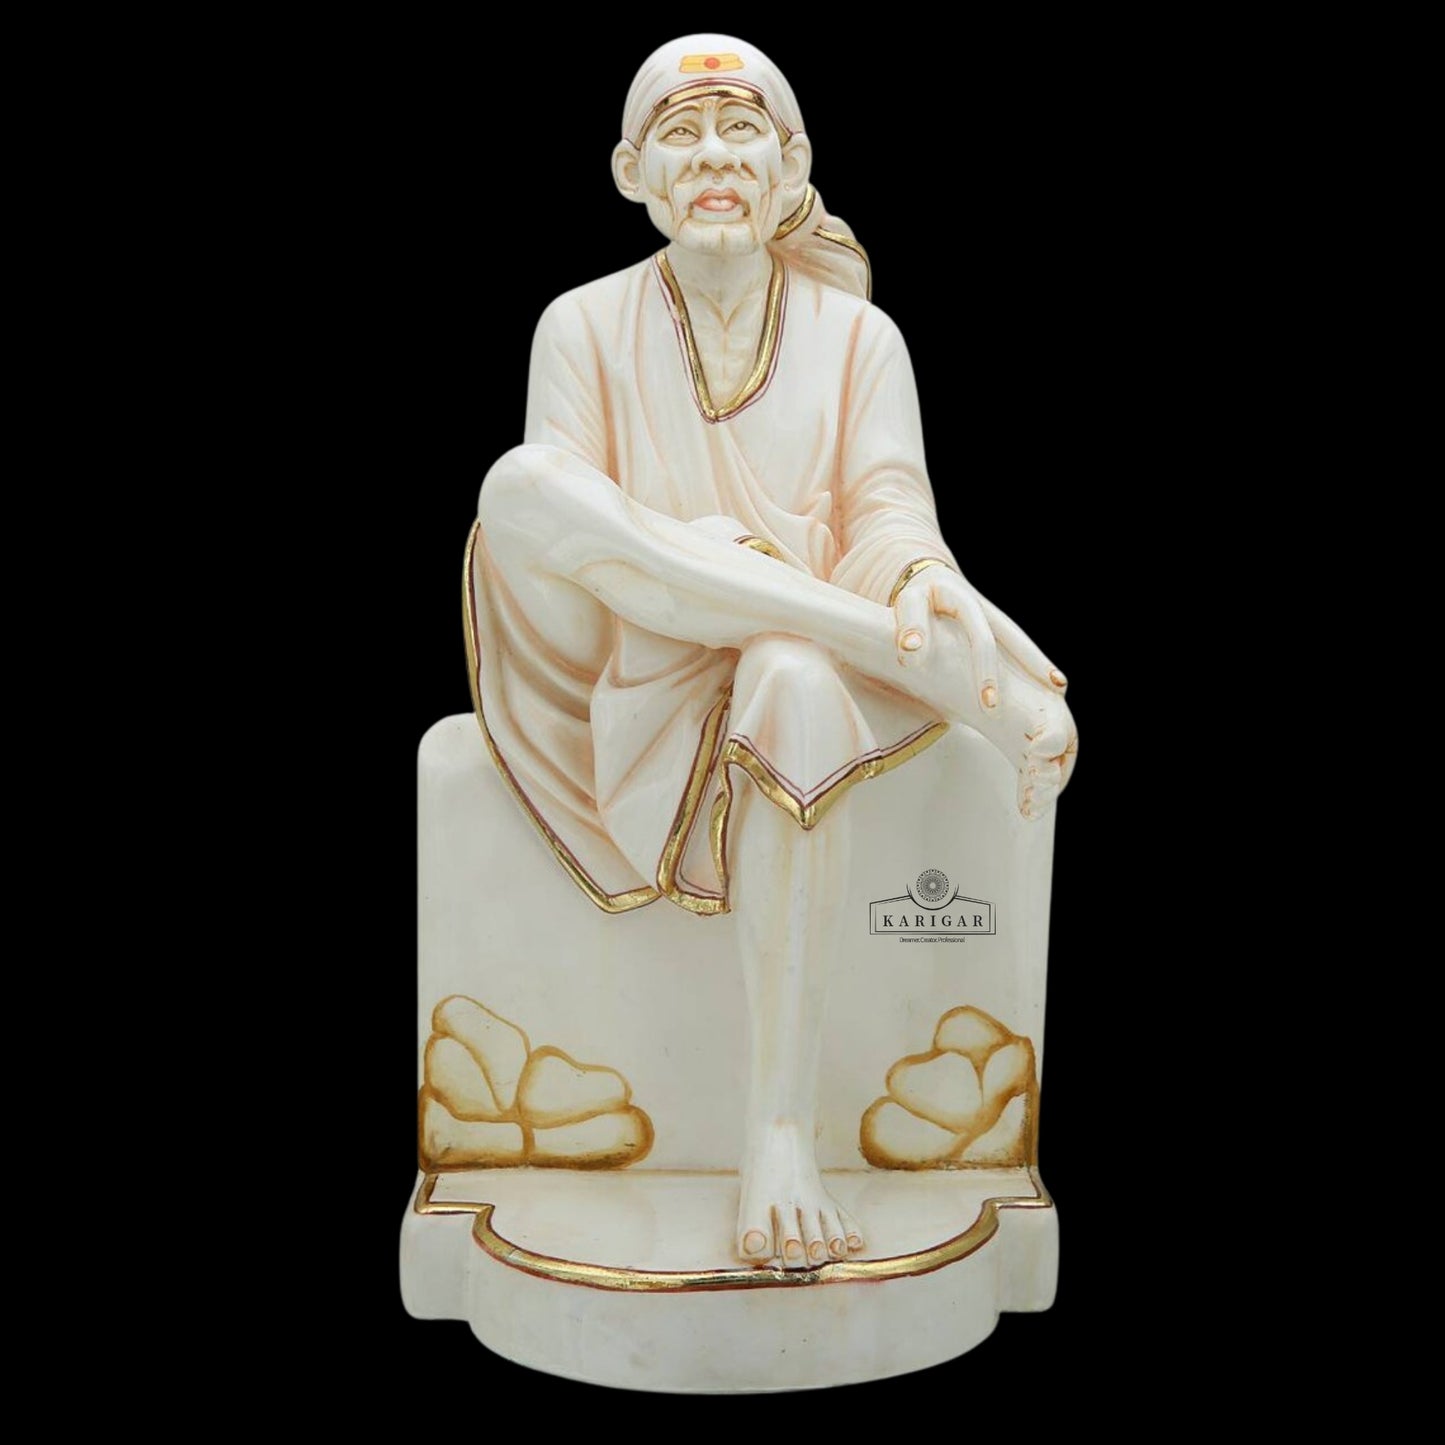 Sai baba Statue Large Marble Sai baba idol, divine statue, Sai baba figurine, Shirdi Sai Baba, Pure Marble Sai Baba Statue, Sri DattaGuru (15 inches) (18 inches)